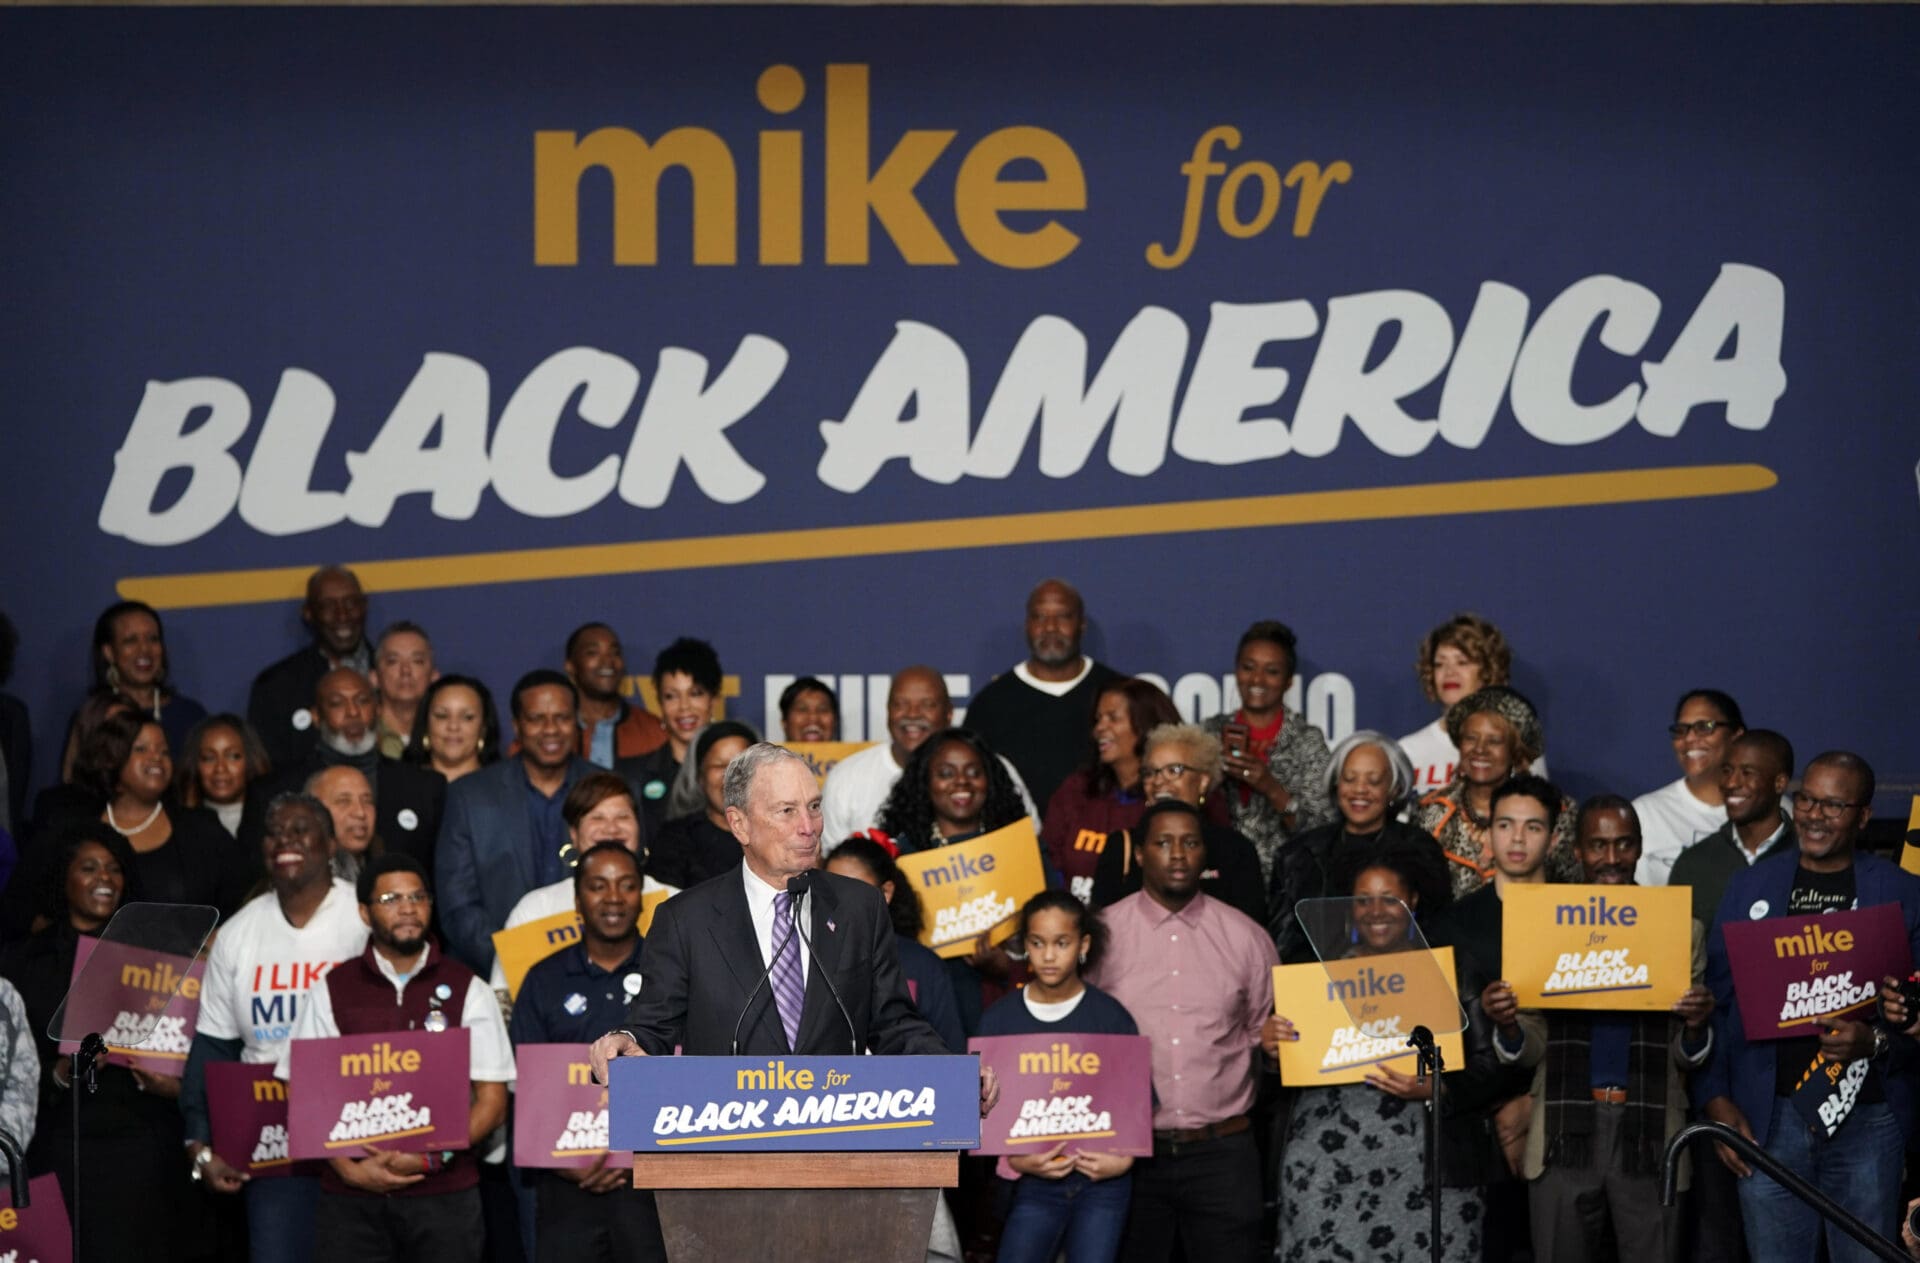 Michael Mike Bloomberg black voters